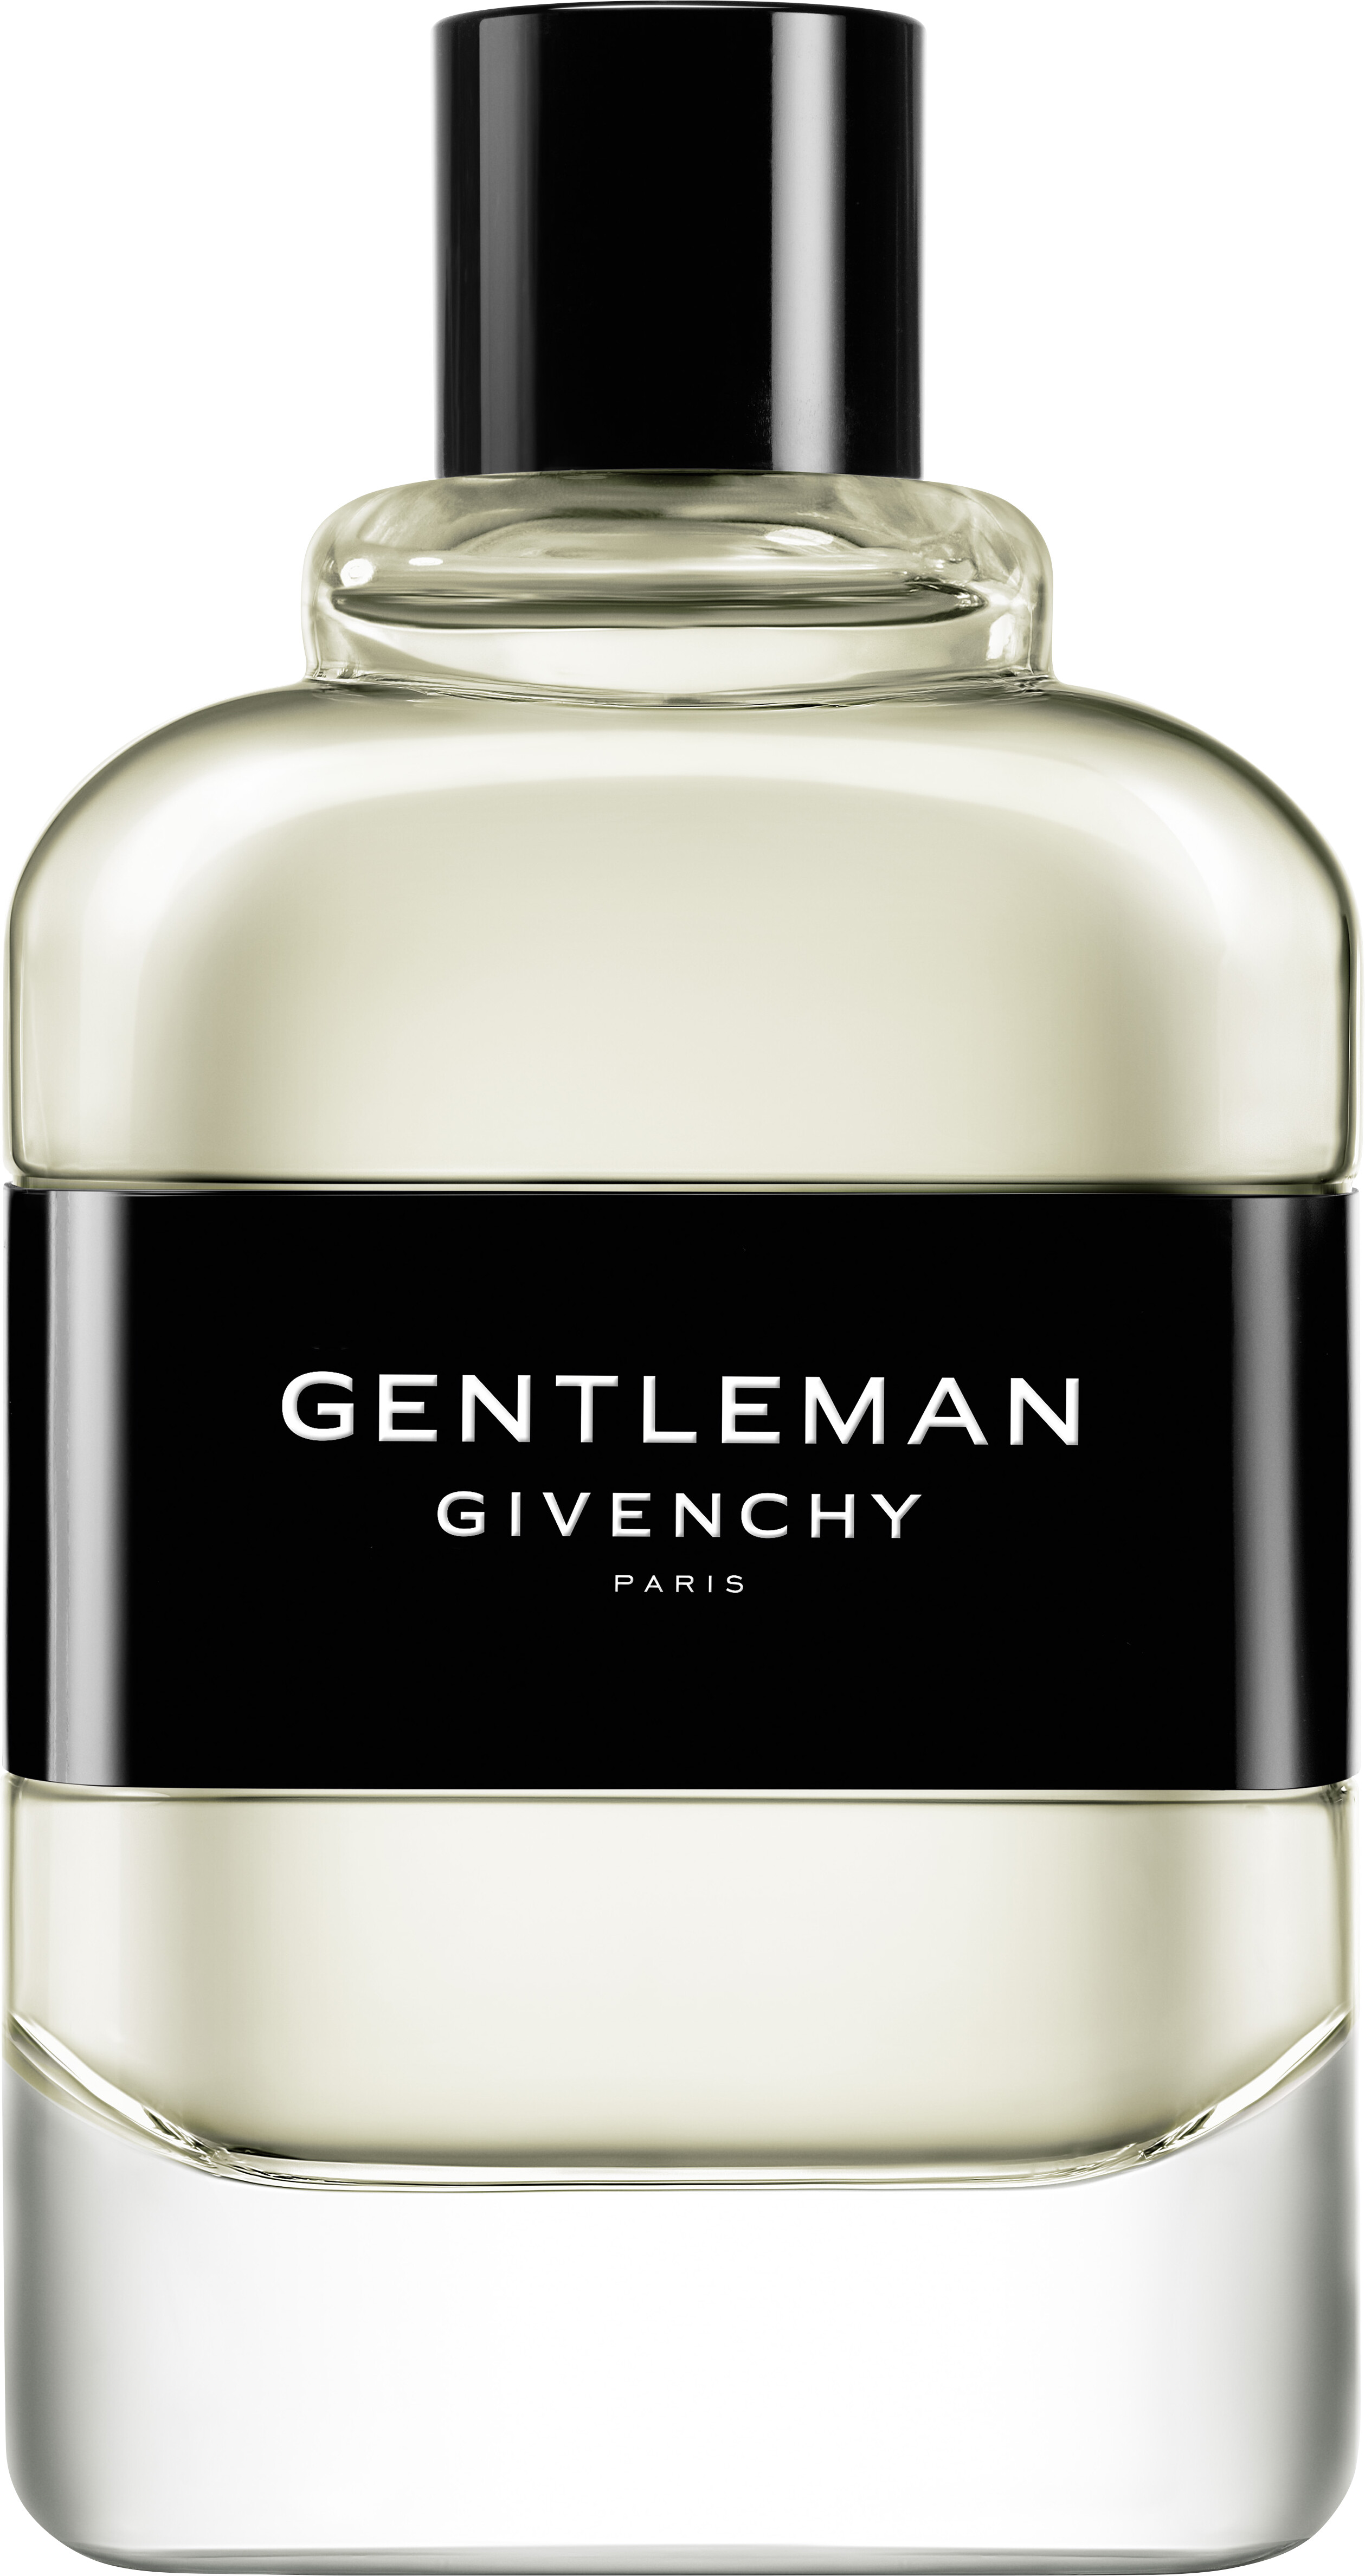 gentleman givenchy 2018